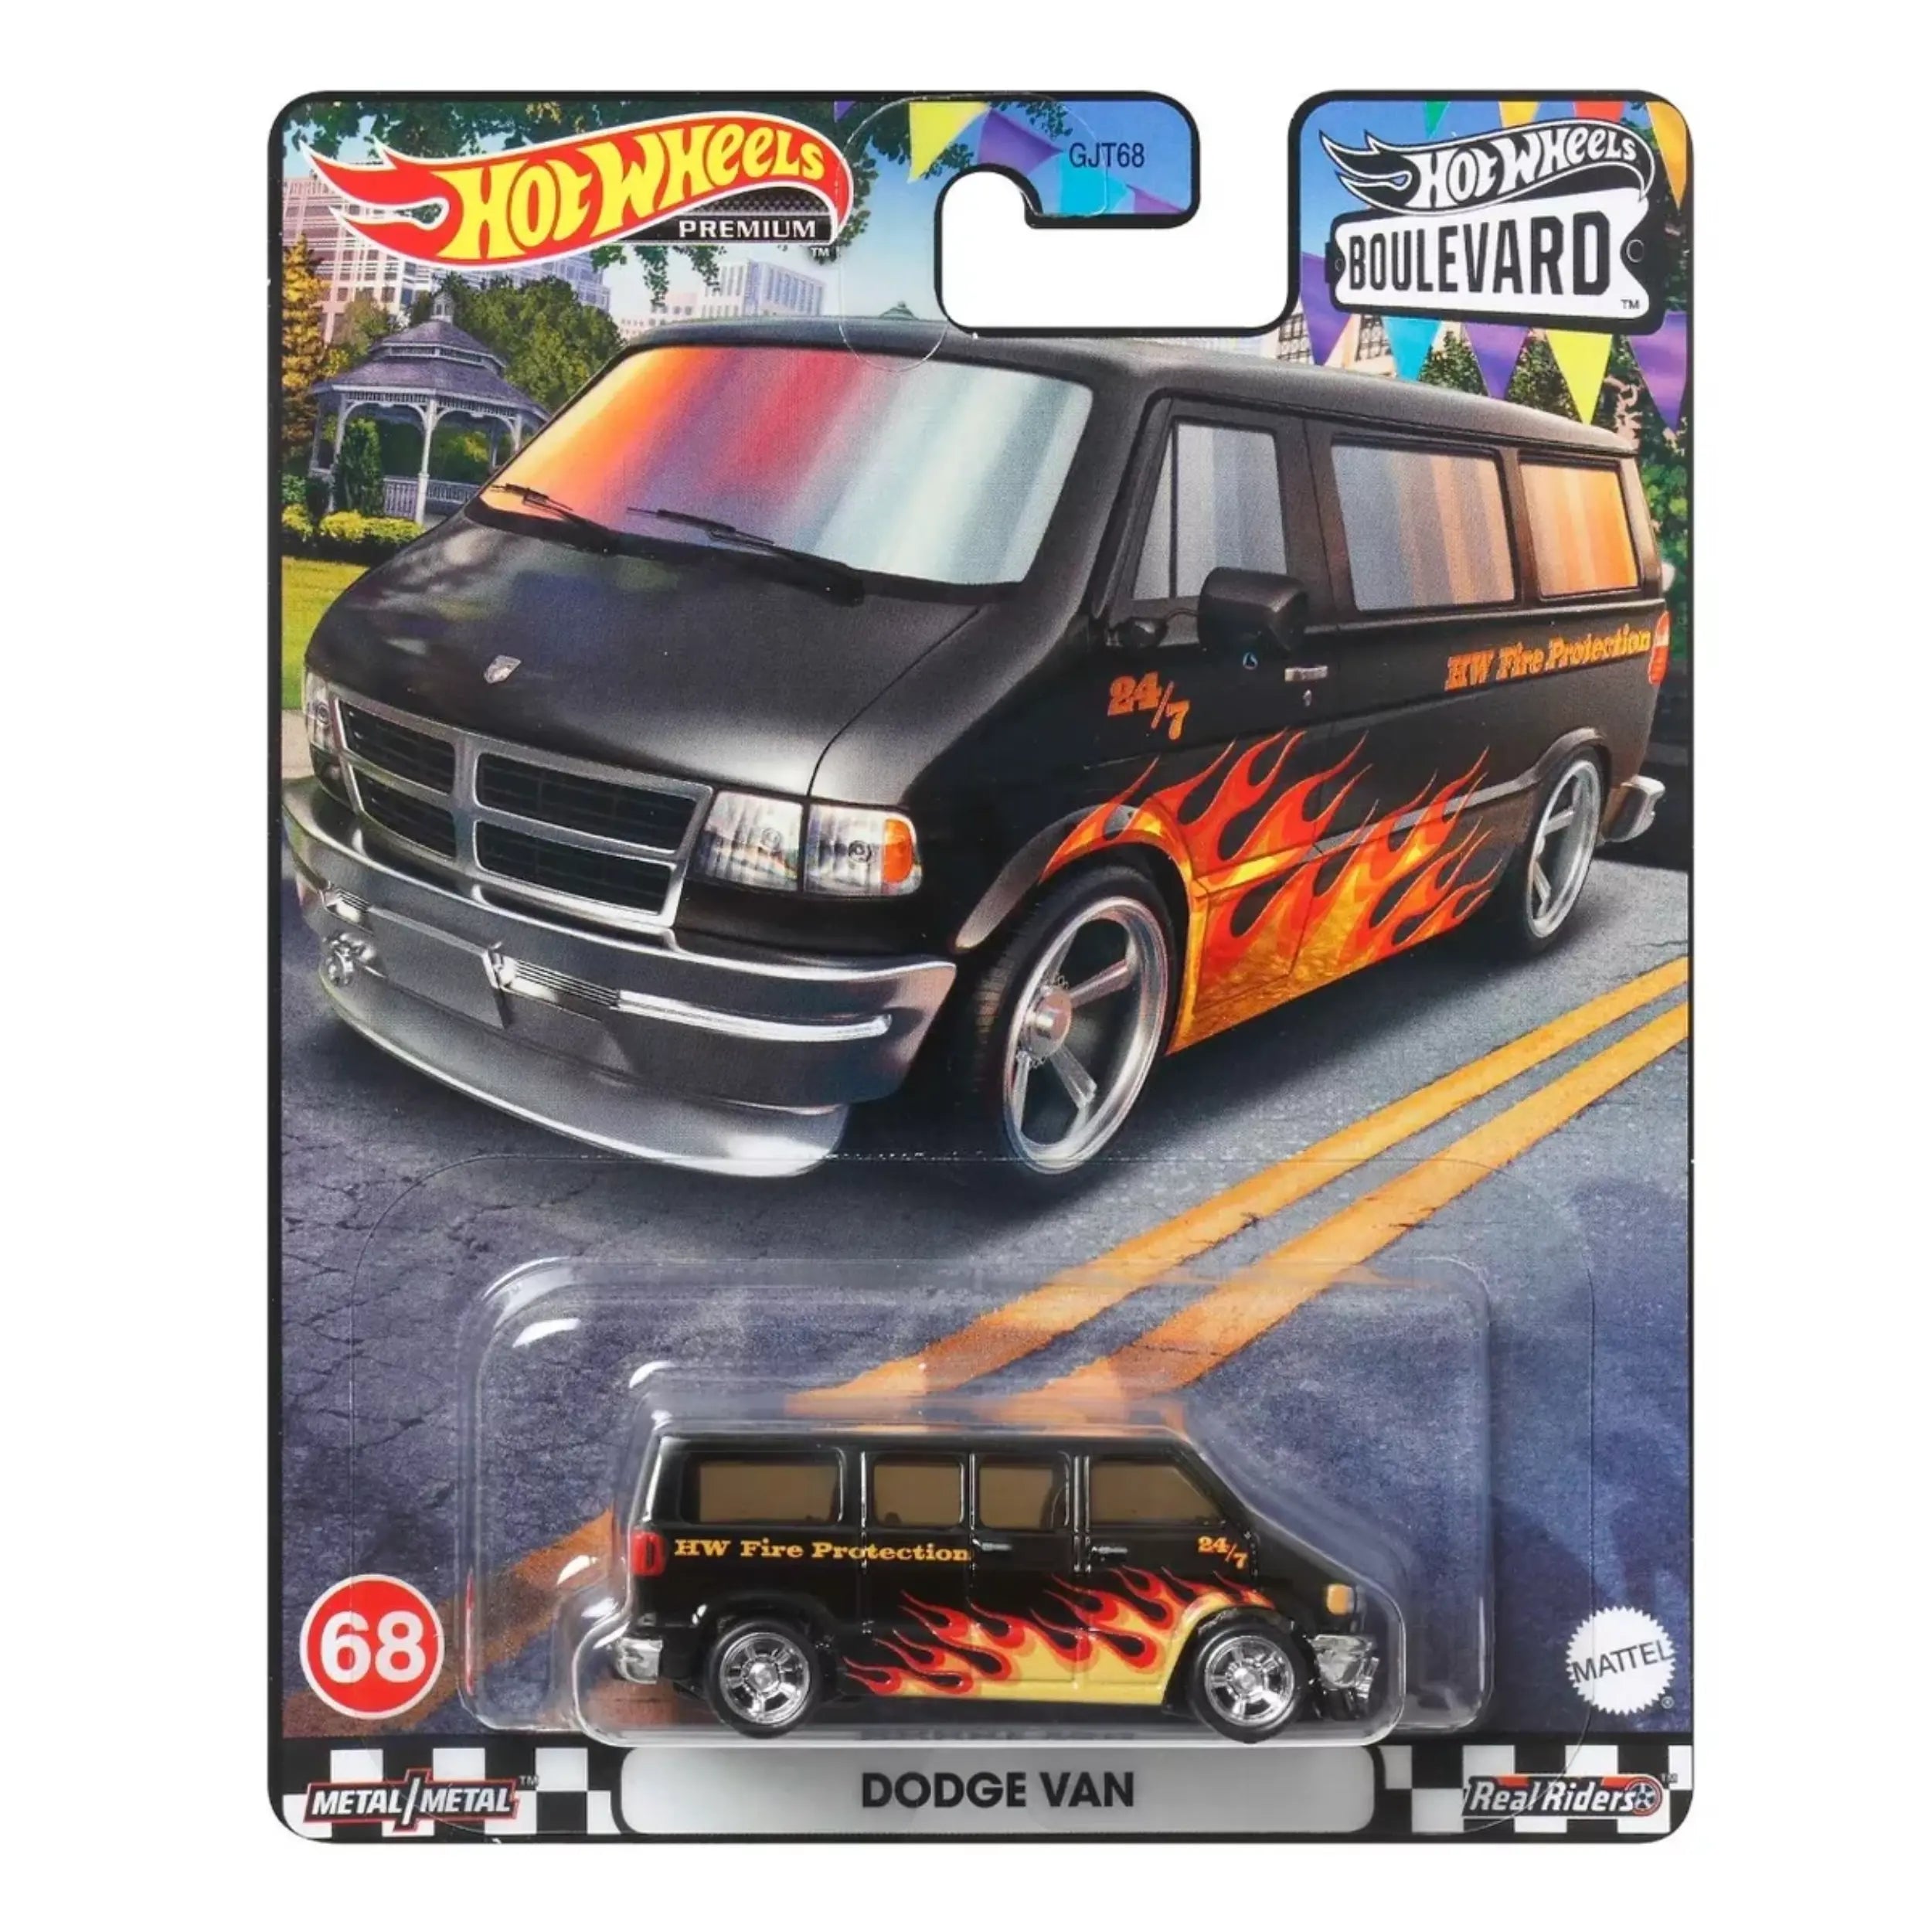 Mattel - Hot Wheels Premium Car Culture Boulevard Vehicle Assortment GJT68 (Random Selection)